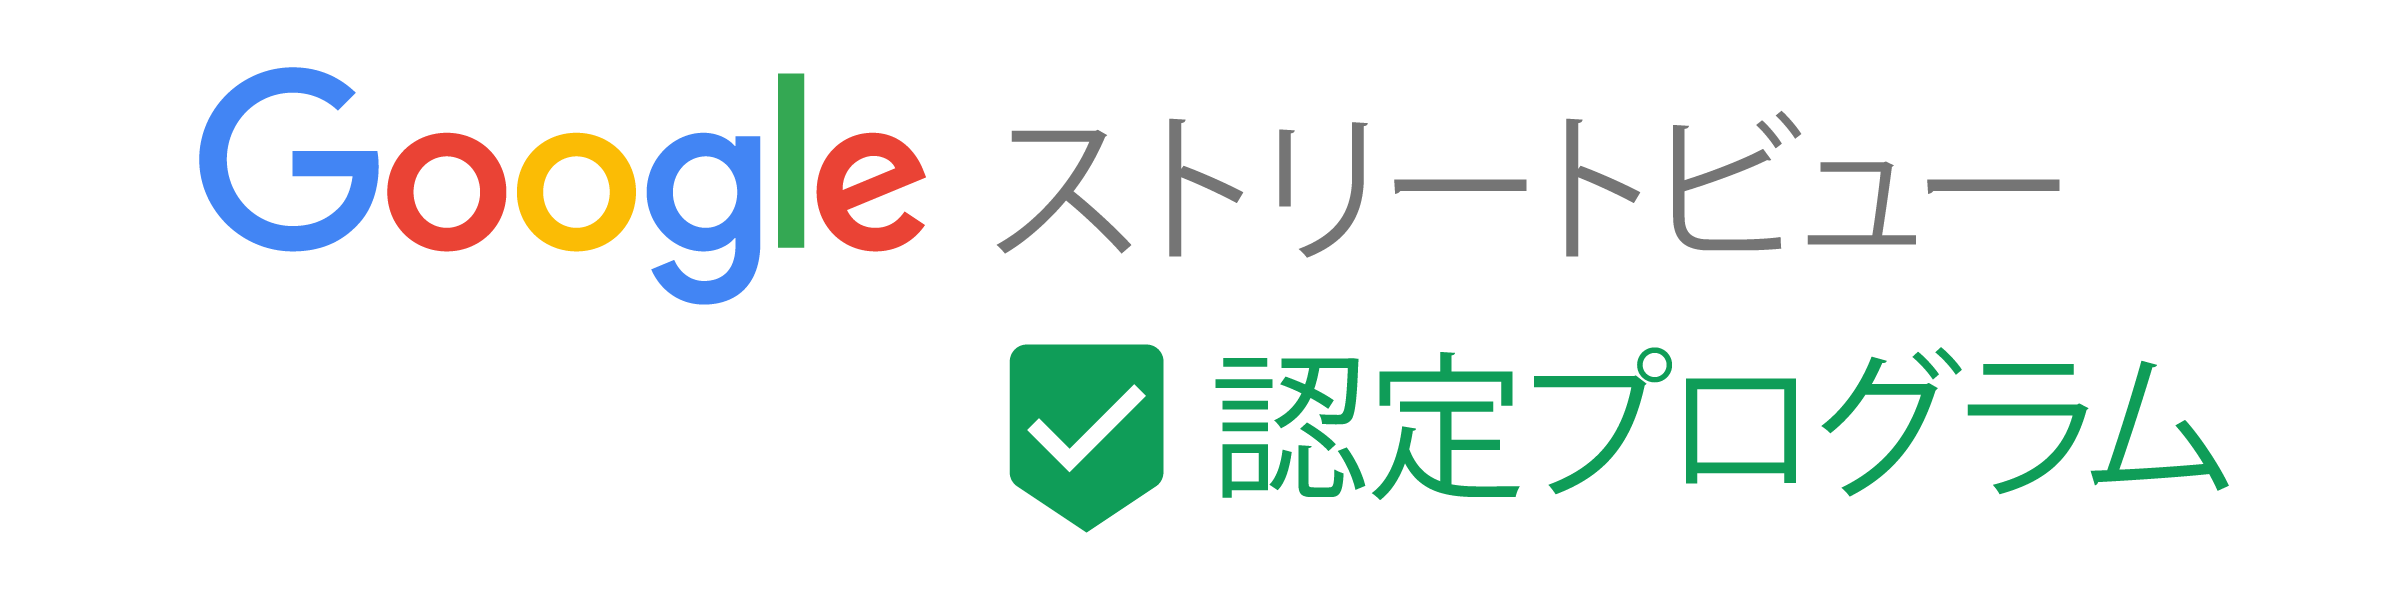 Google認定フォトグラファーバッジ日本語